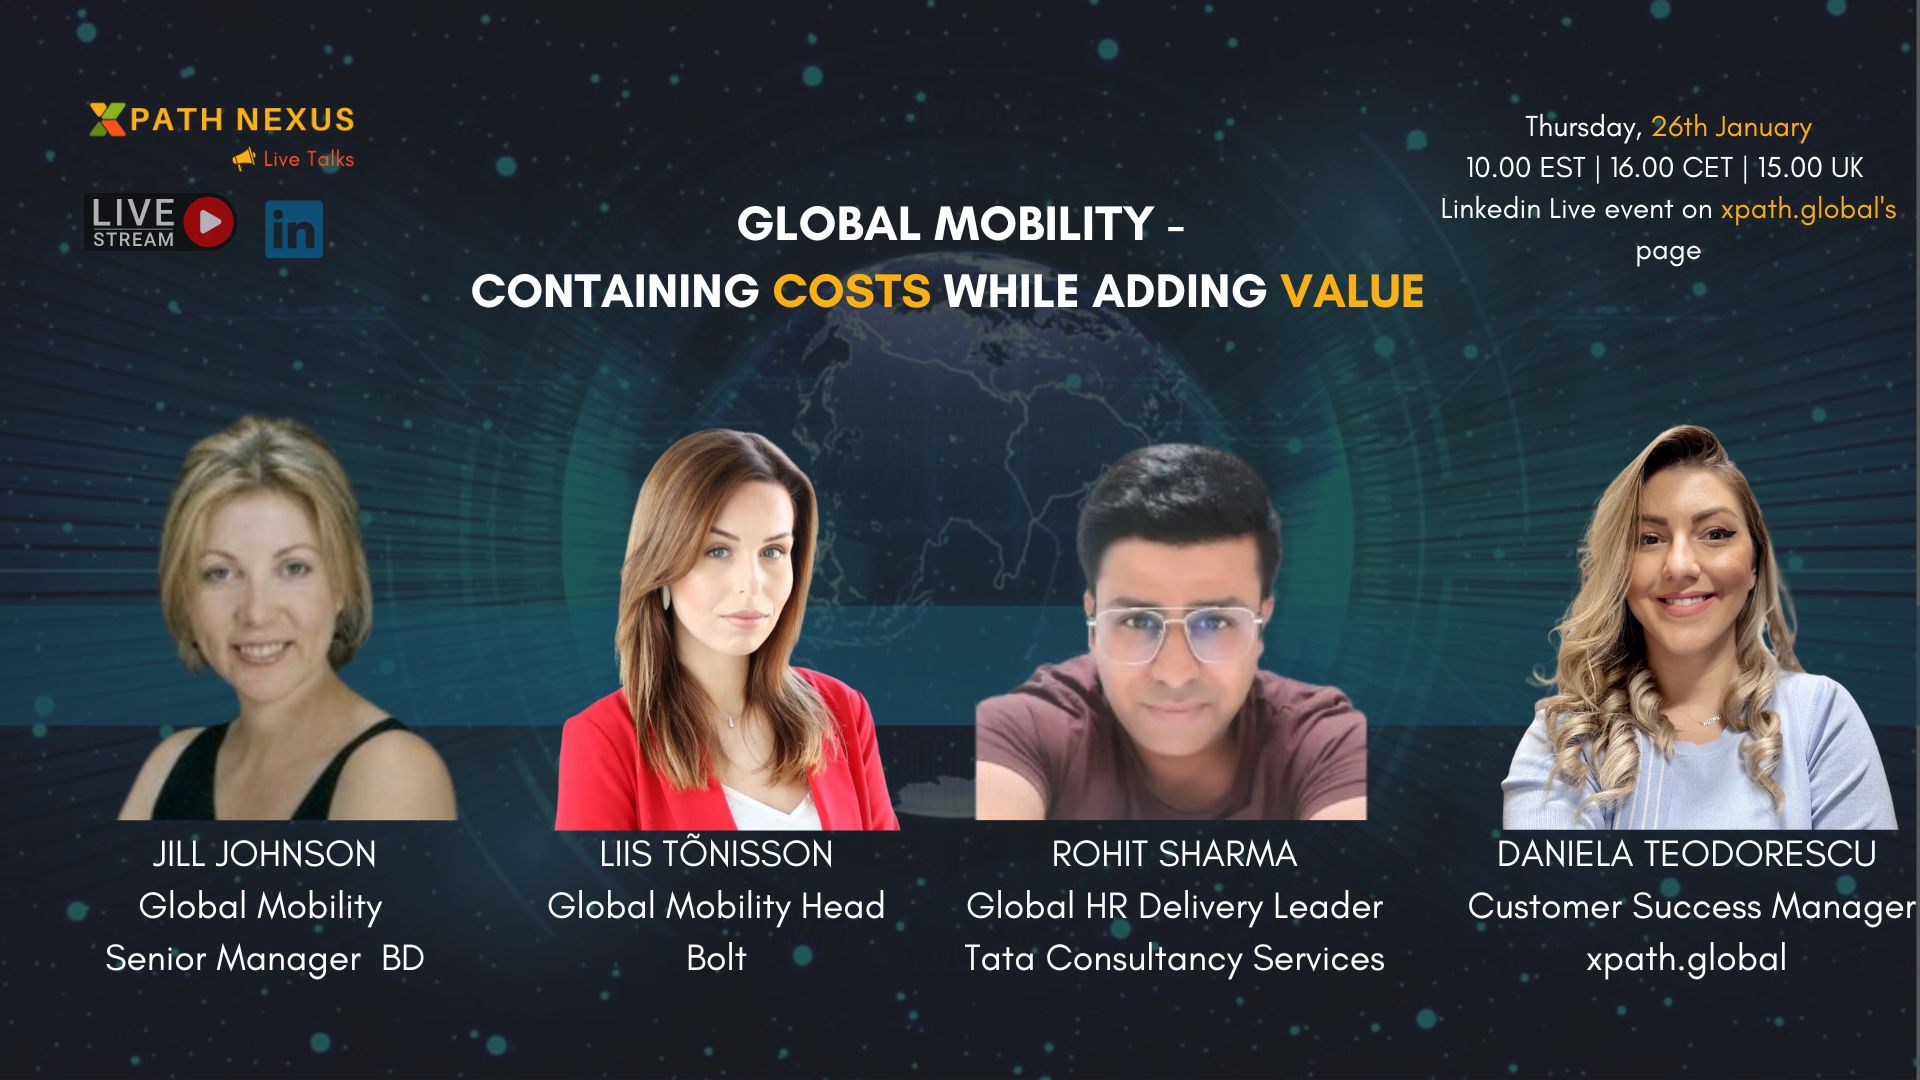 xpath.global live talks on global mobility topics